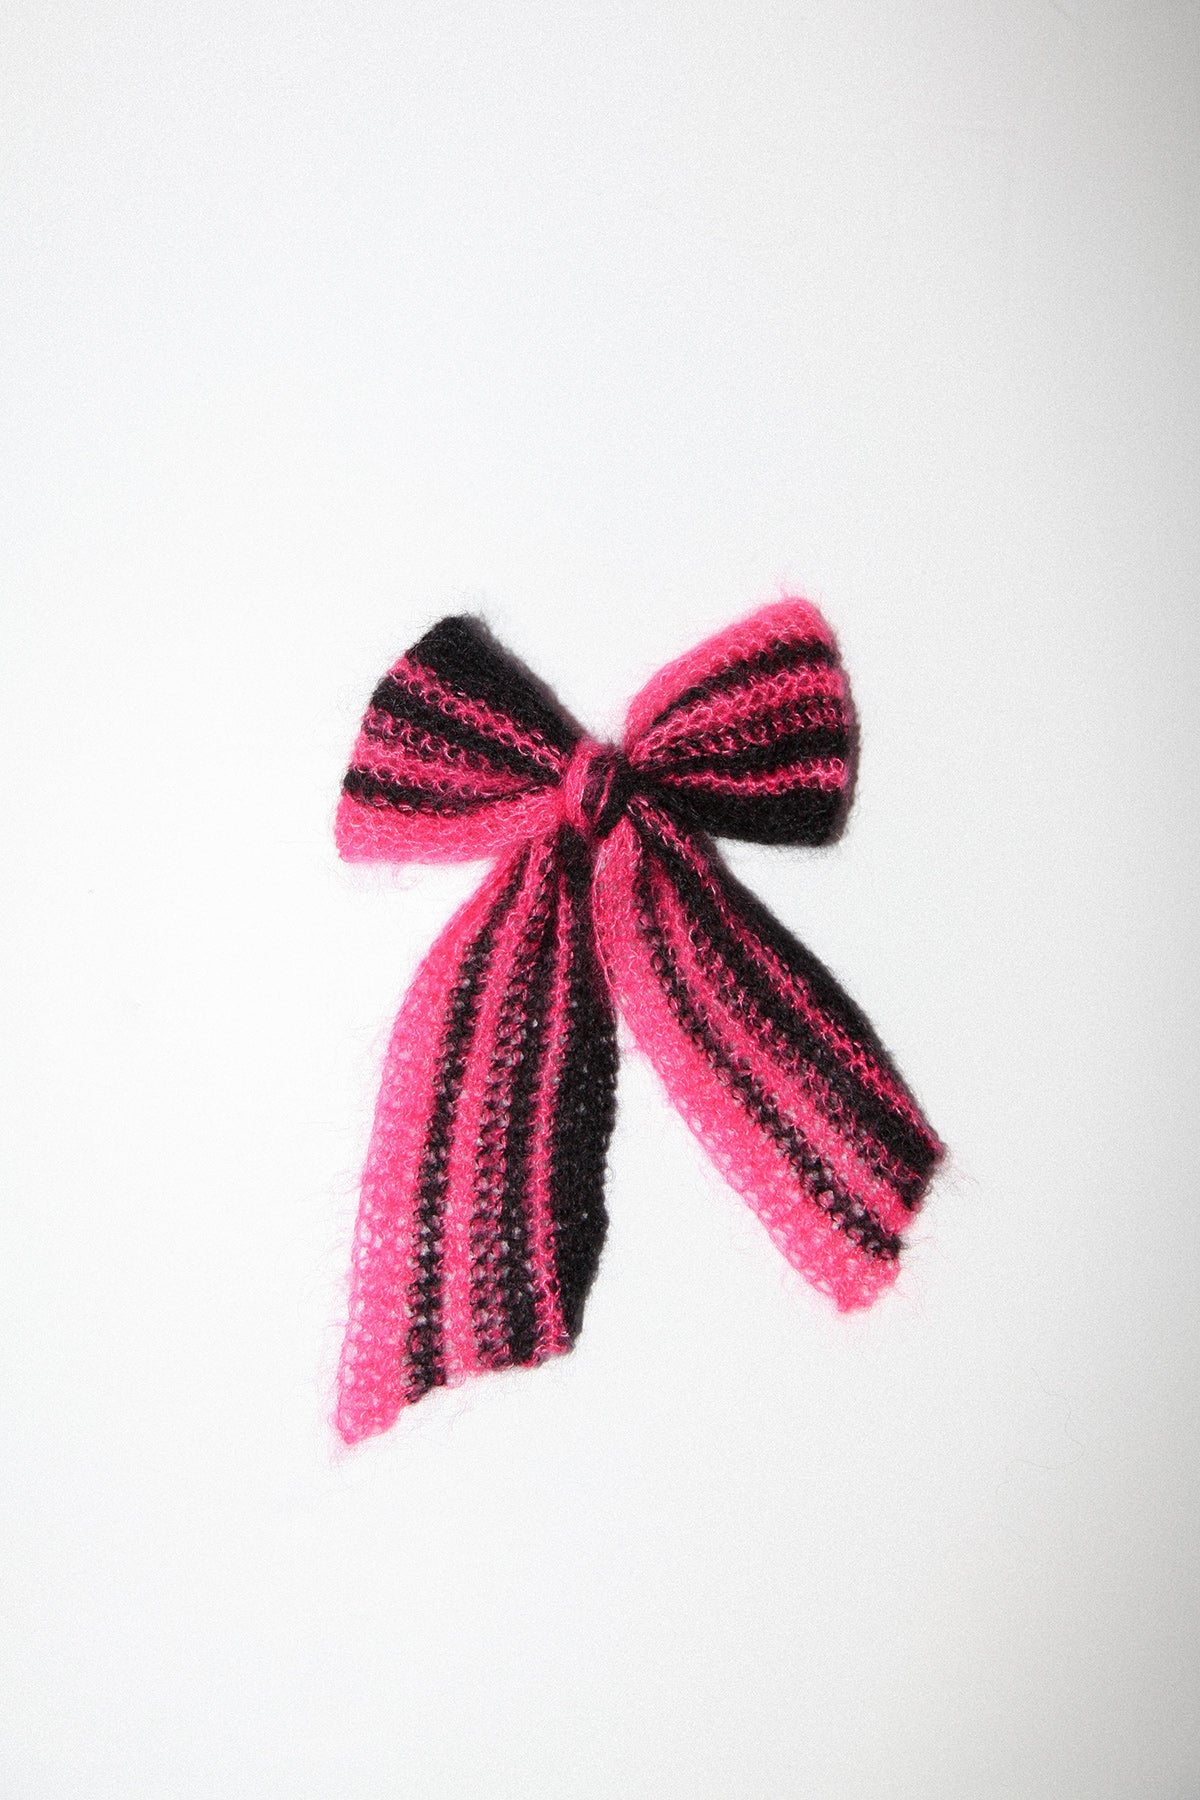 Funny Sad Stuff Large Crocheted Bow in Black & Fuchsia Stripe